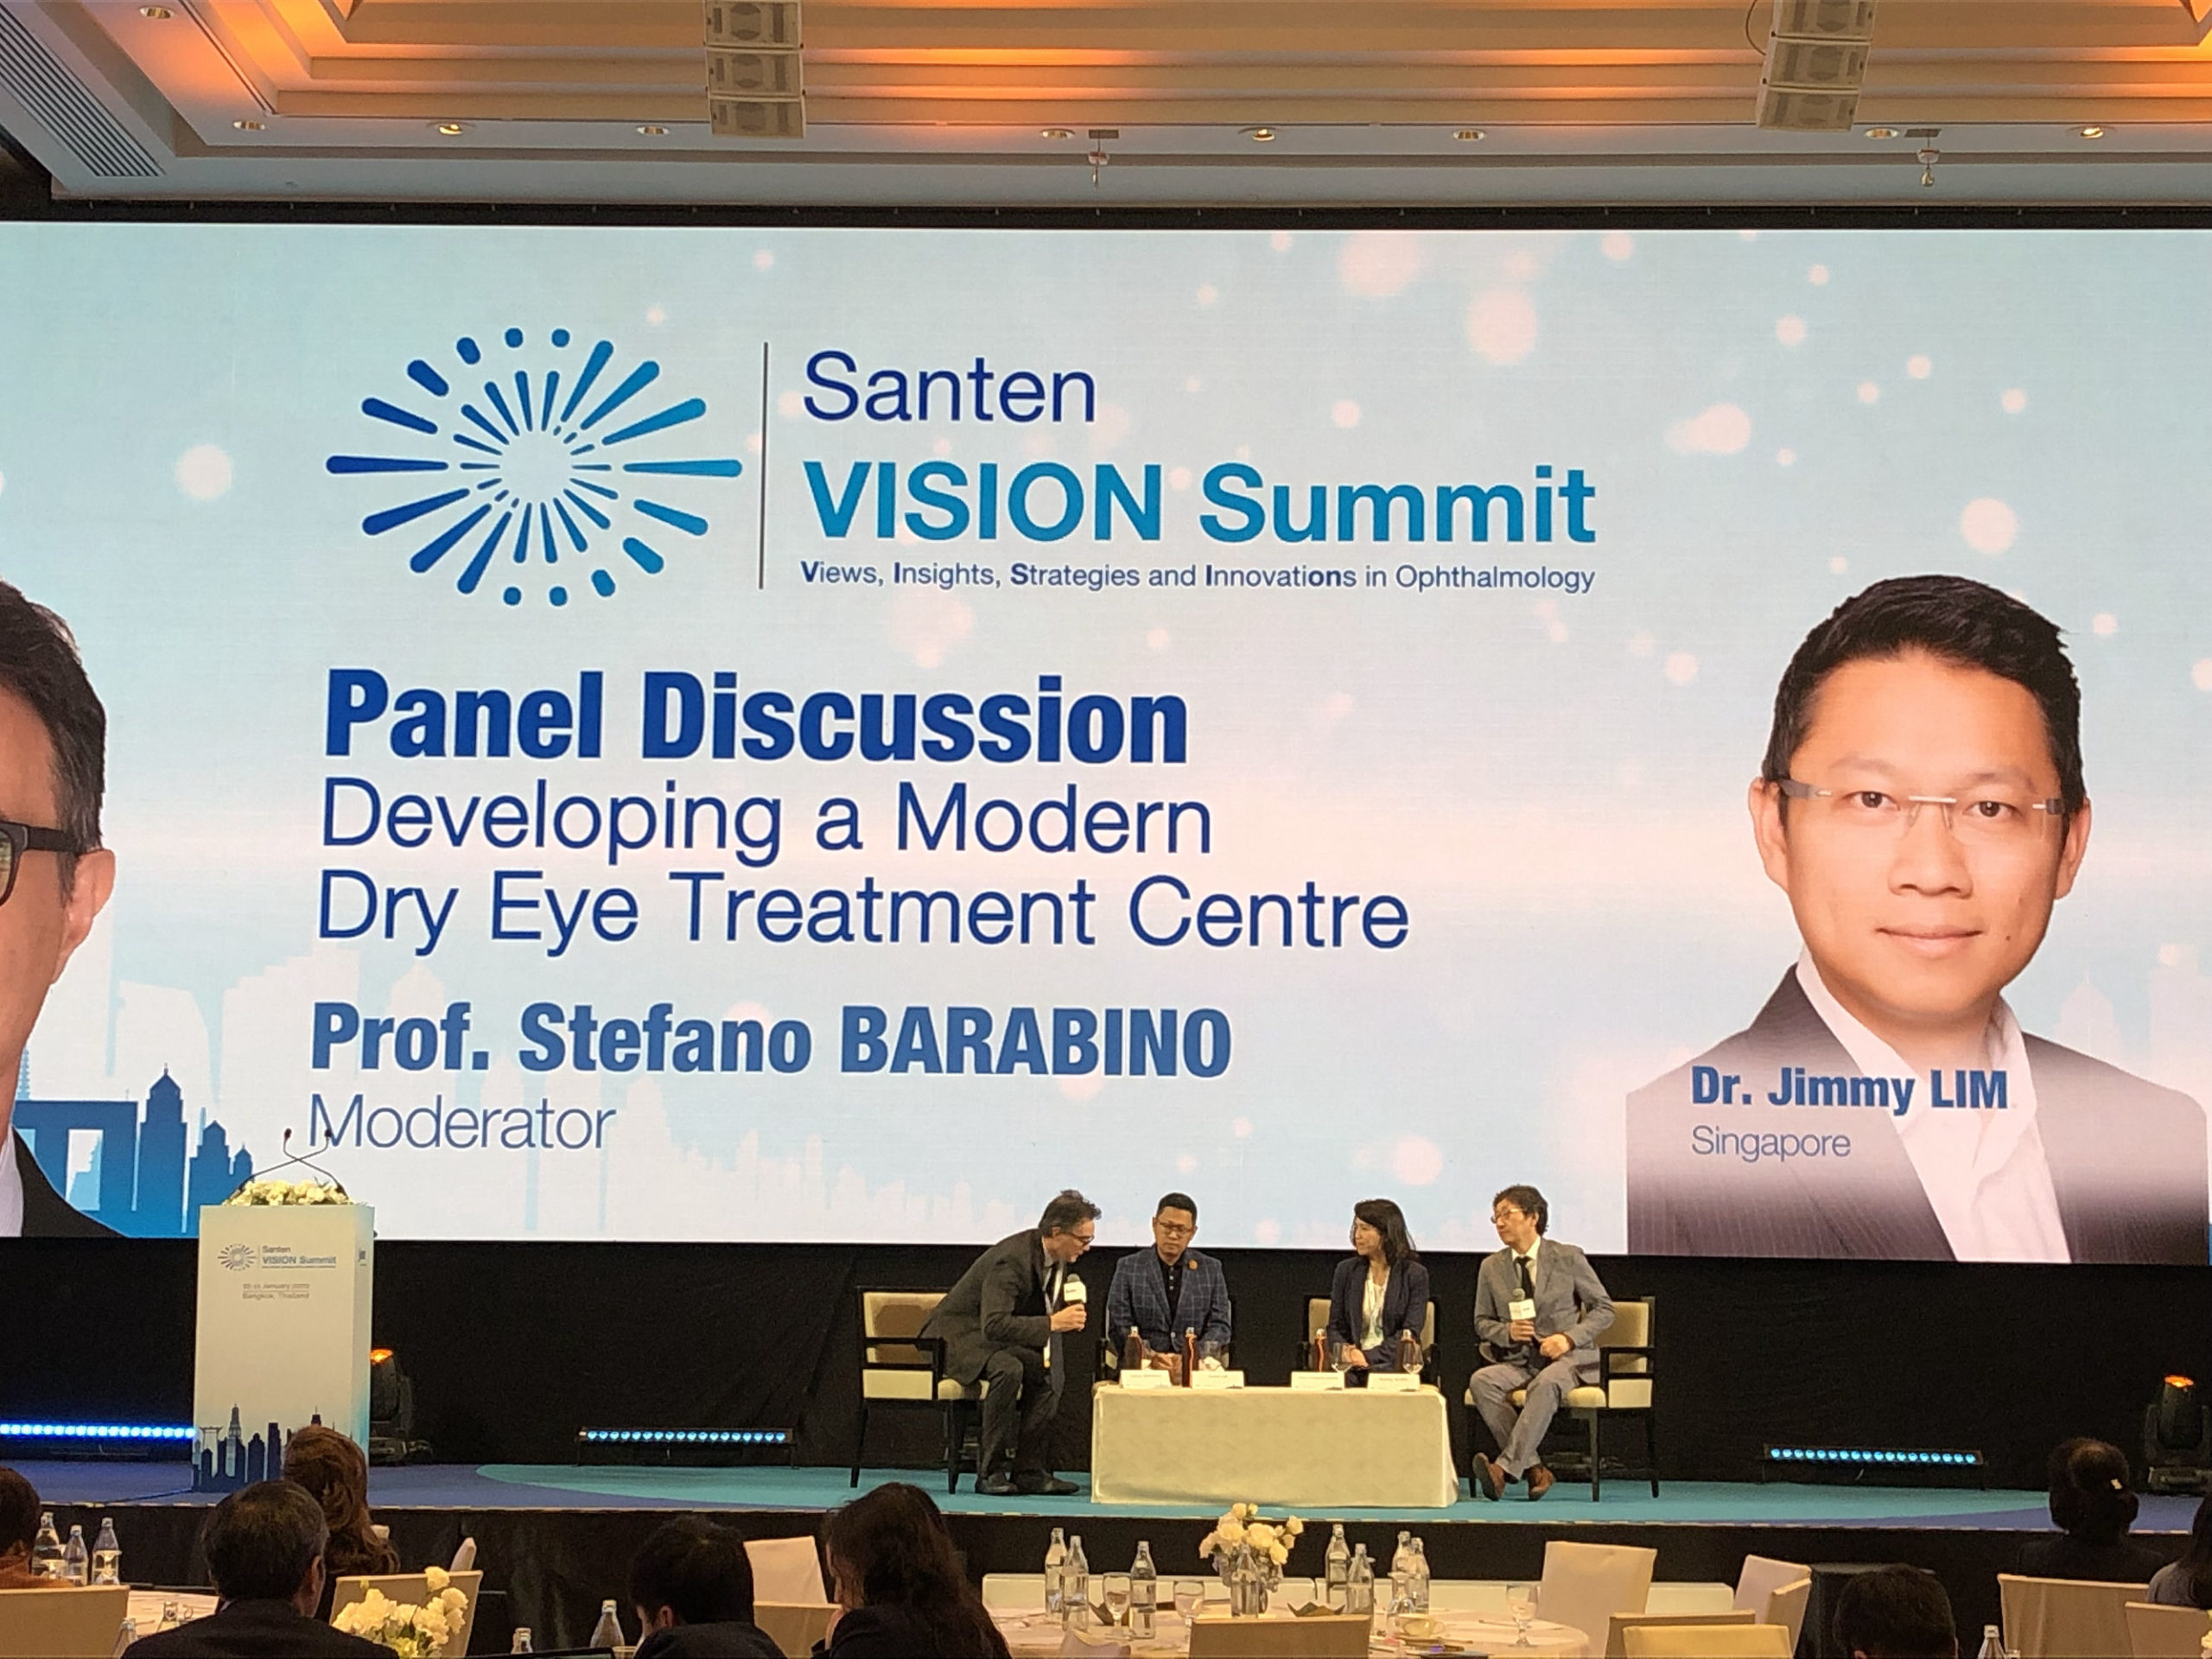 Tomorrow’s Opthalmology, Today, Santen Vision Summit 2020, Bangkok, Thailand